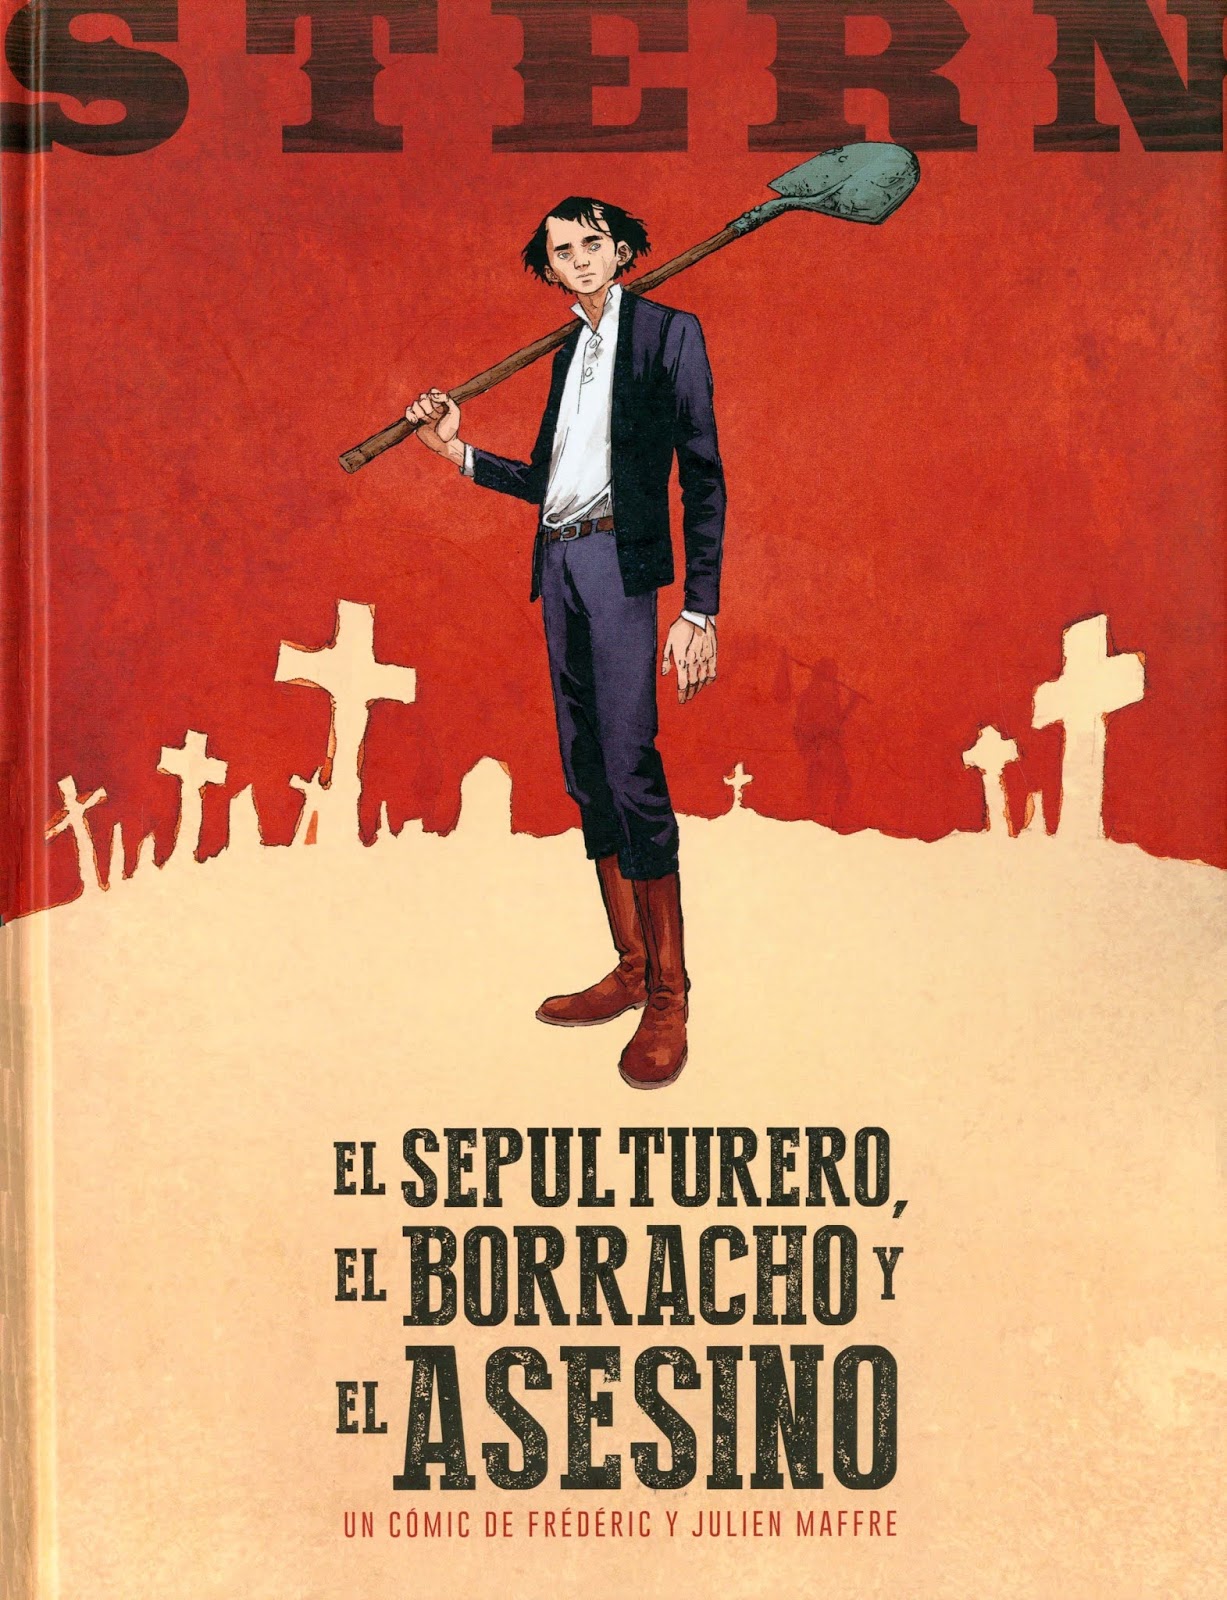 Stern - Novela Español Pdf